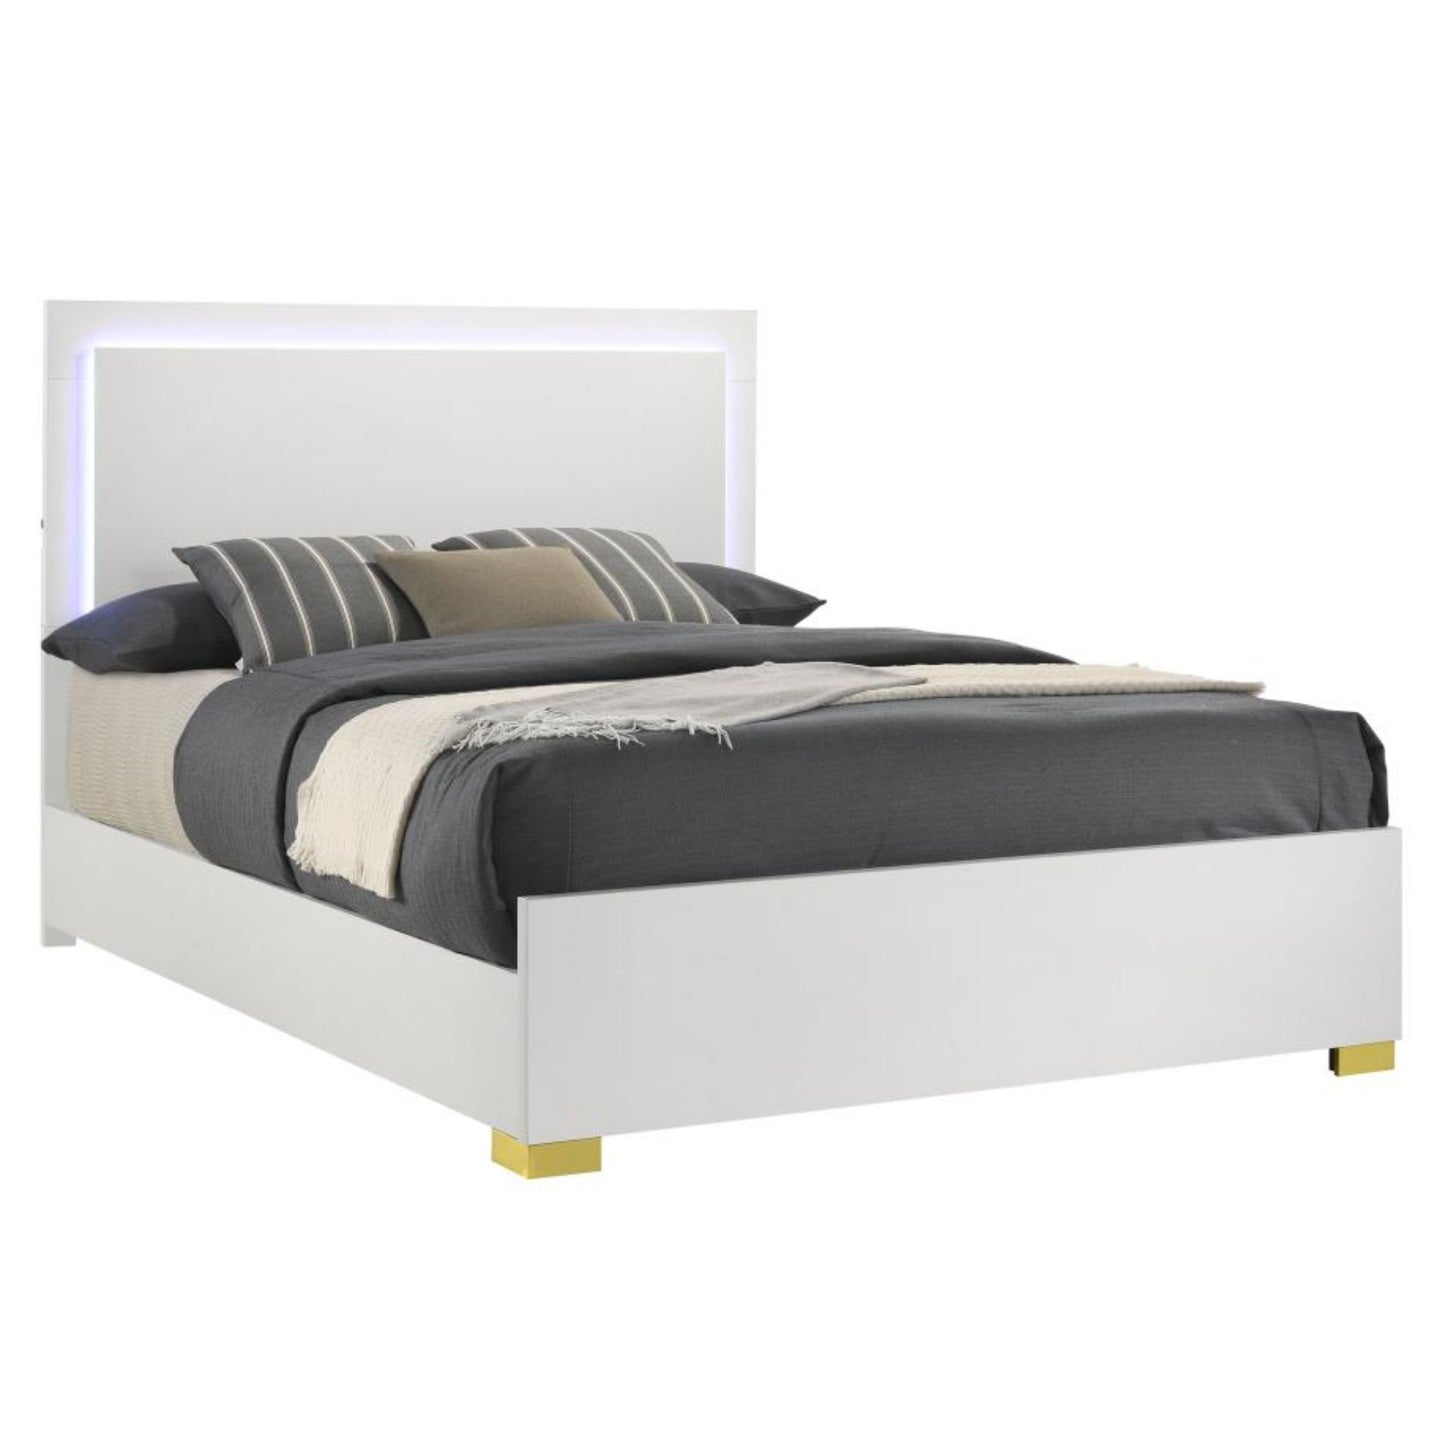 MARCELINE 5-piece Eastern King Bedroom Set with LED Headboard White